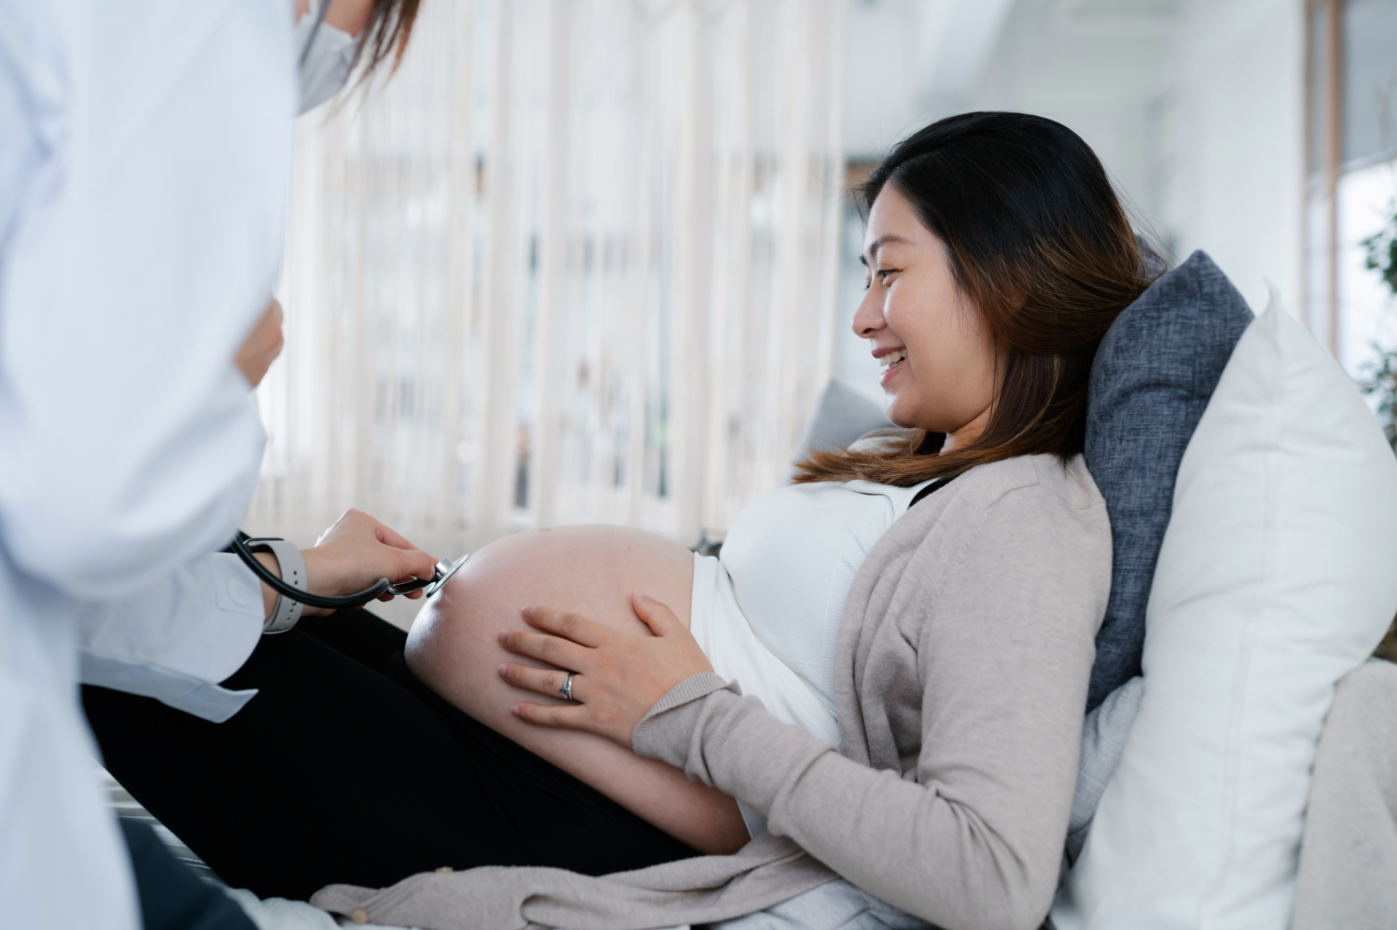 Non-Invasive Prenatal Testing